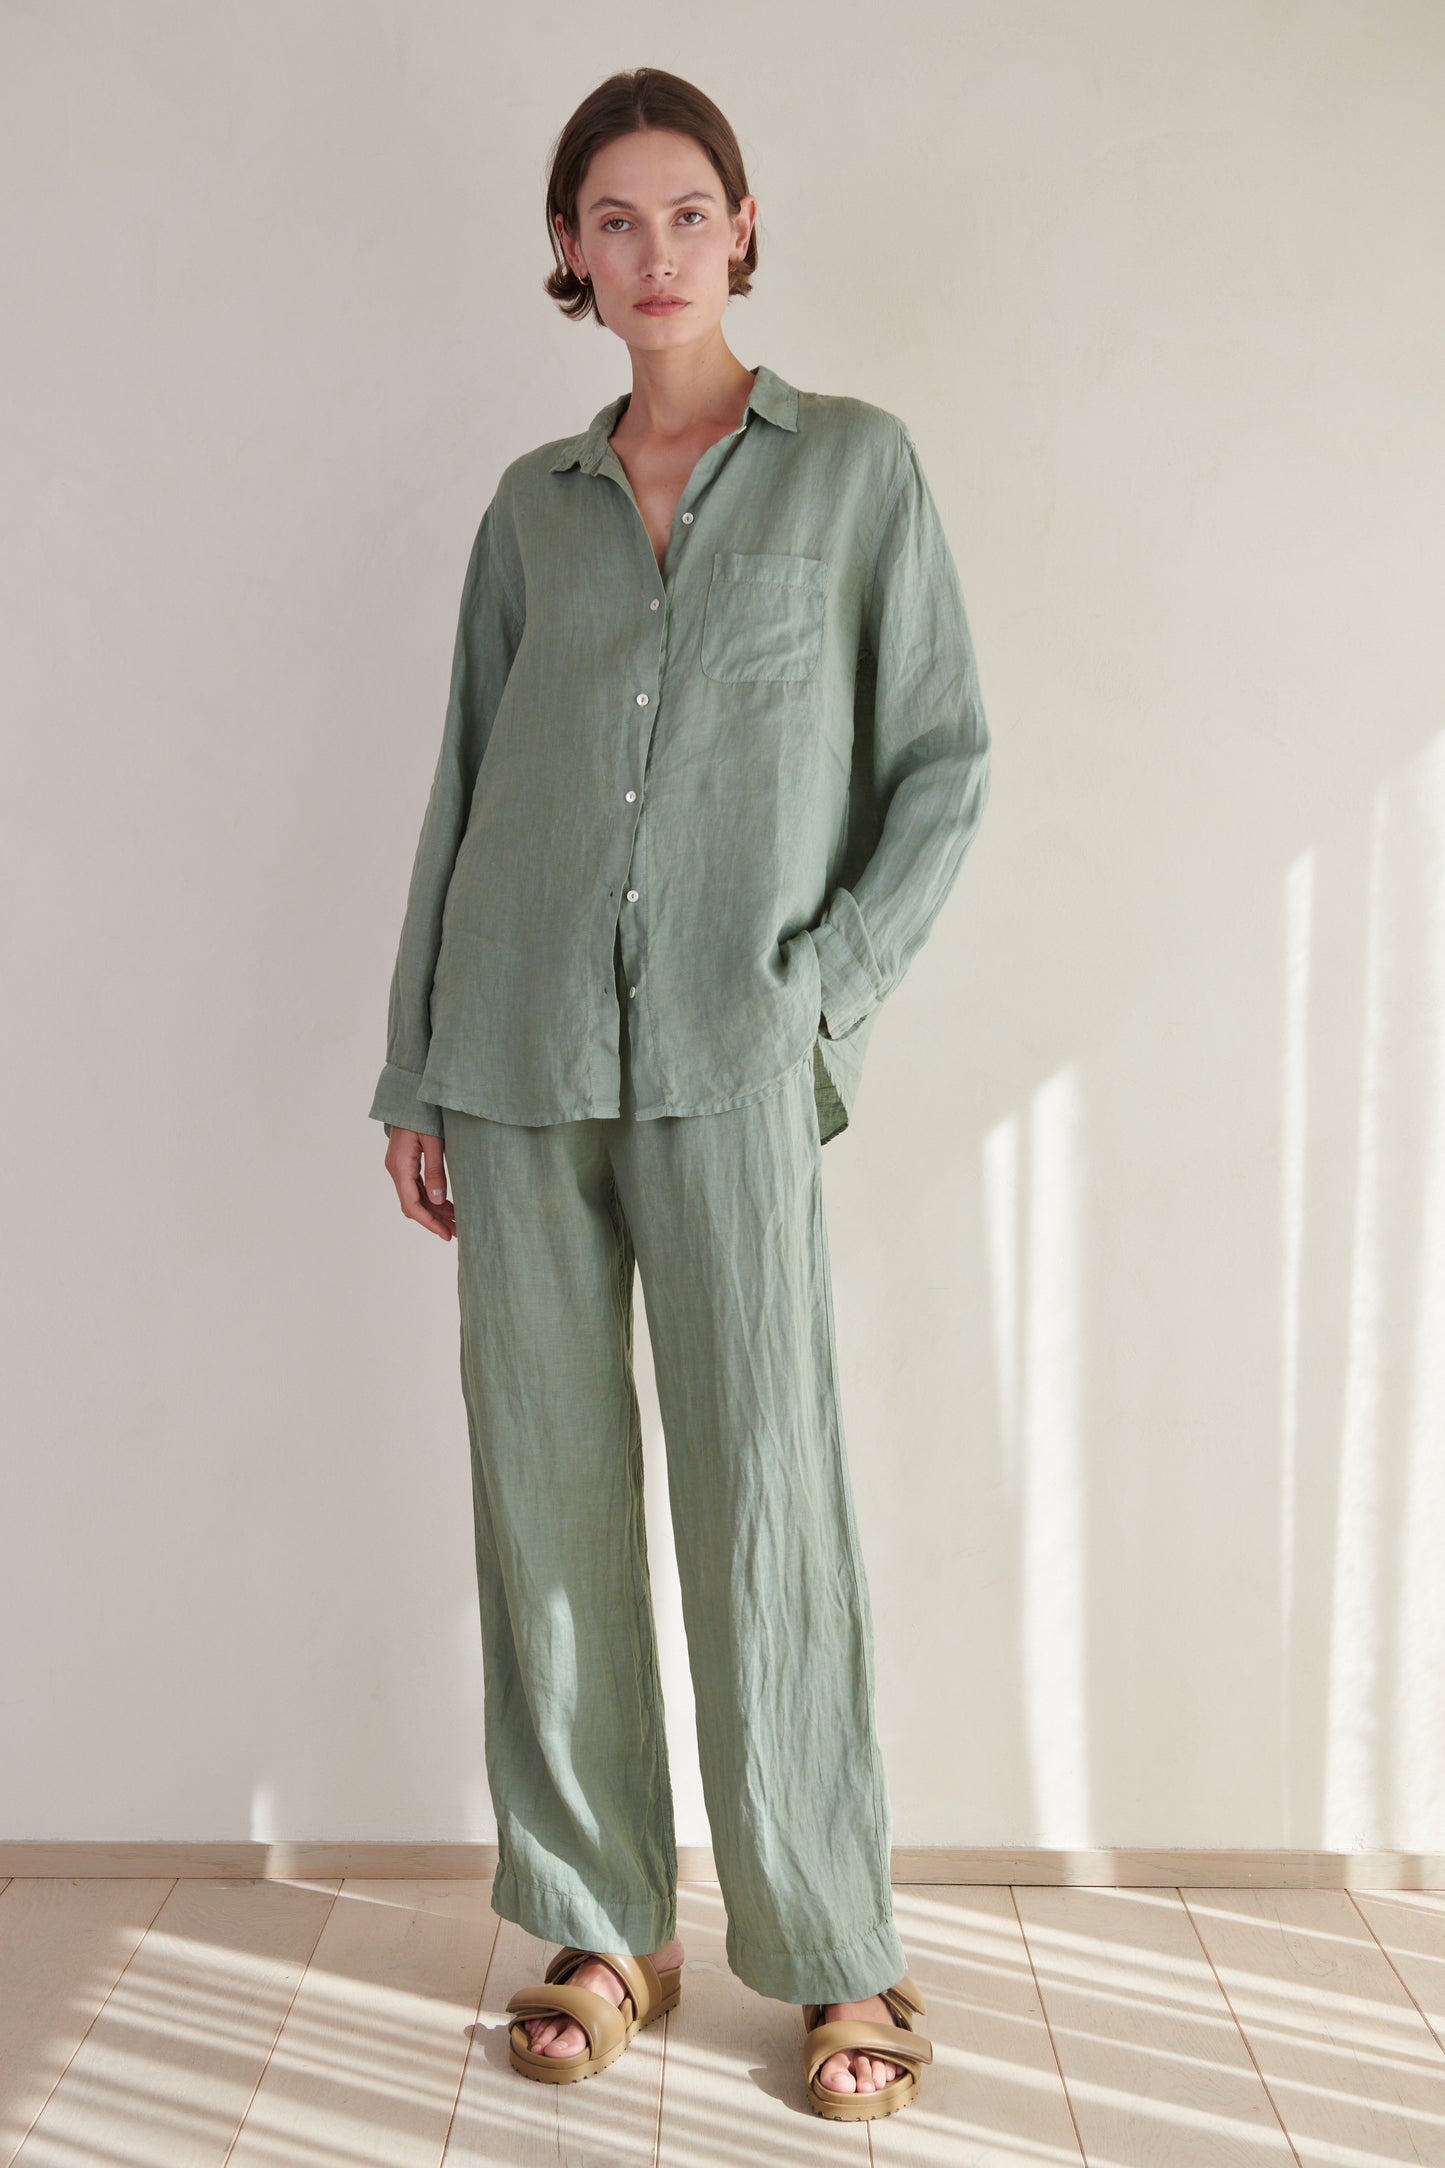 The model is wearing a green Velvet by Jenny Graham linen PICO PANT set.-26293120499905